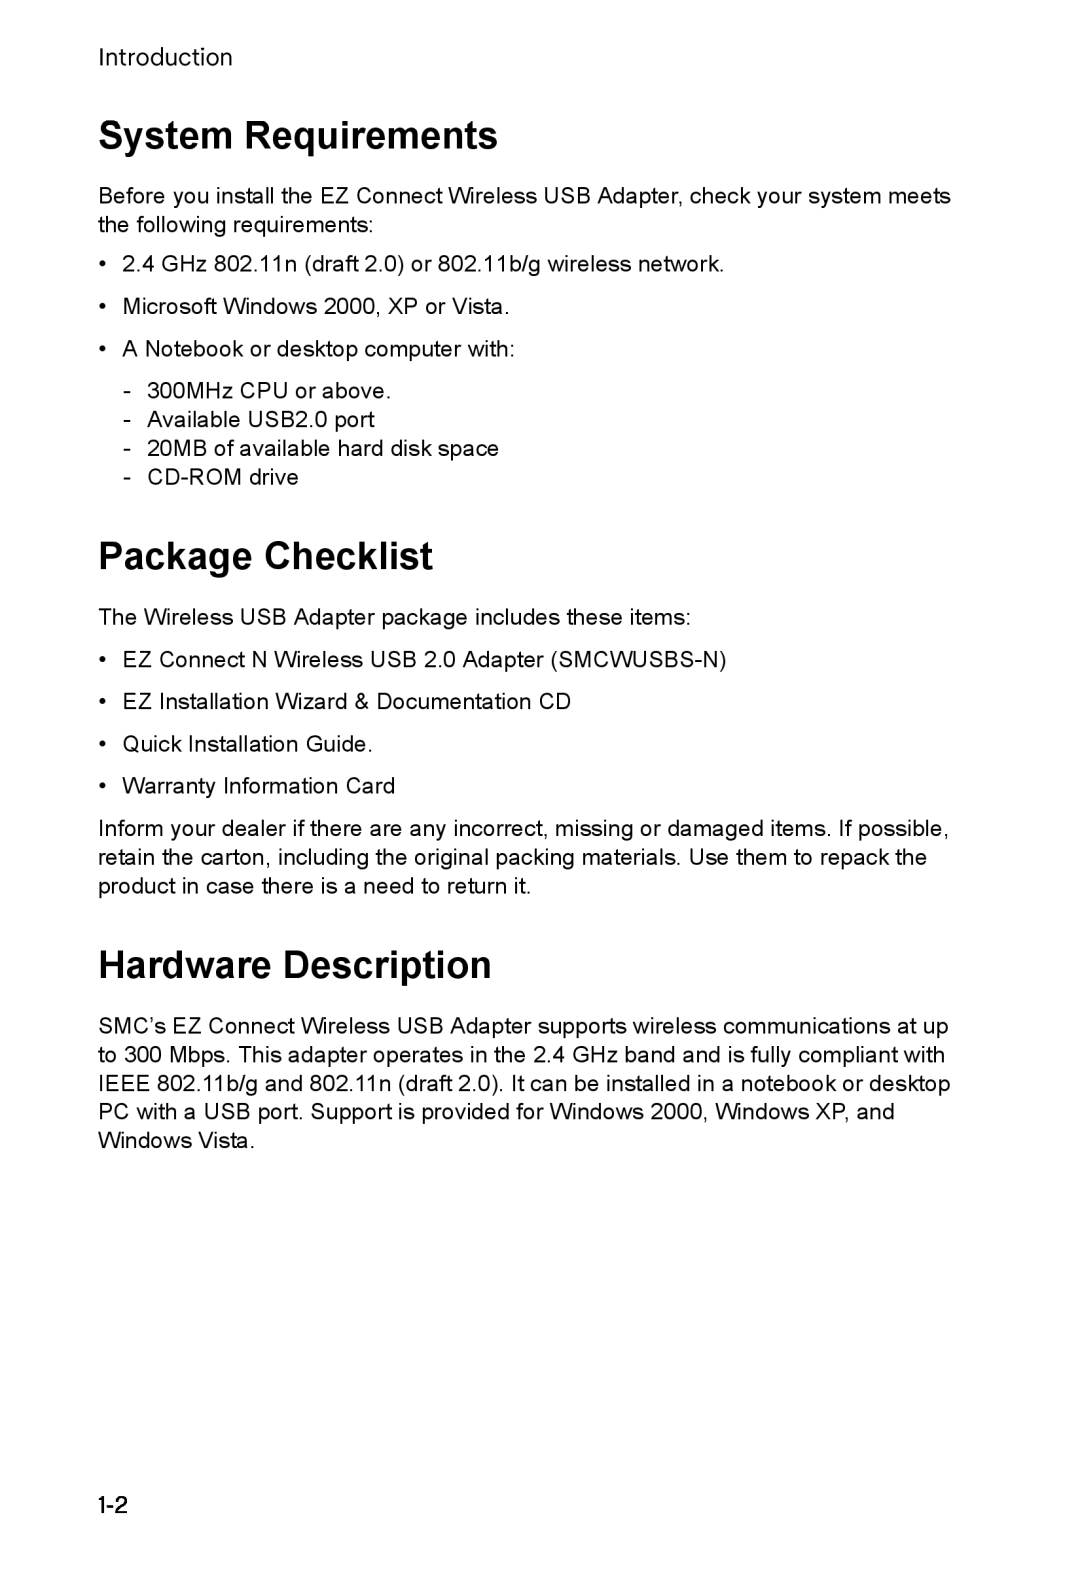 SMC Networks SMCWUSBS-N manual System Requirements, Package Checklist, Hardware Description 